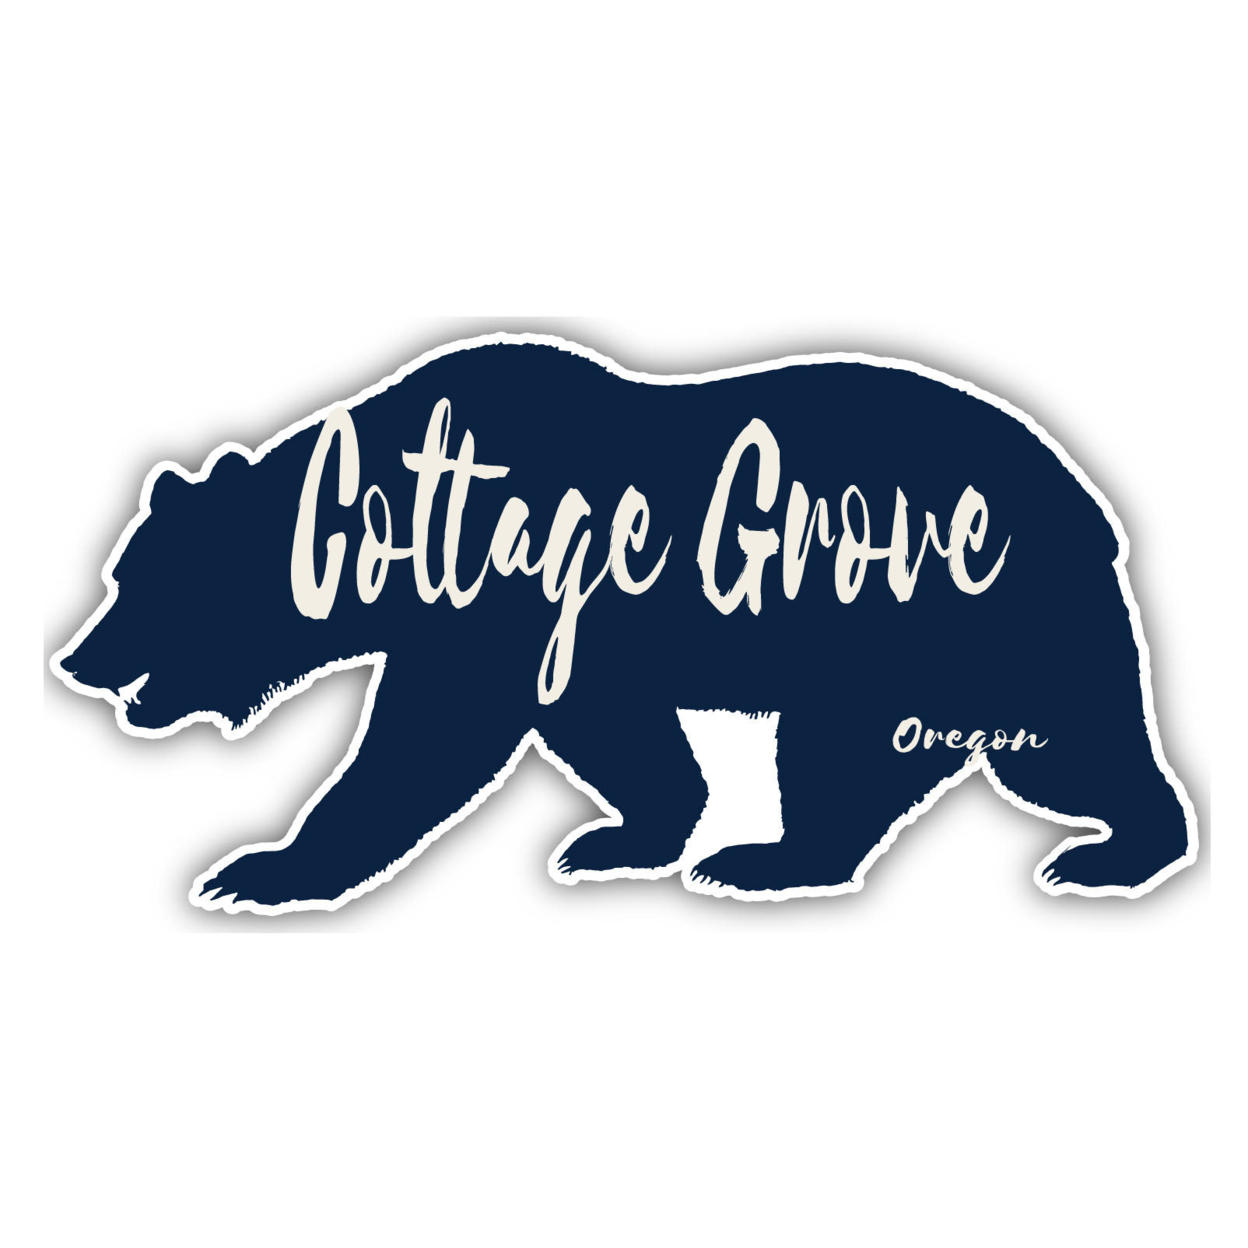 Cottage Grove Oregon Souvenir Decorative Stickers (Choose Theme And Size) - 4-Pack, 4-Inch, Bear